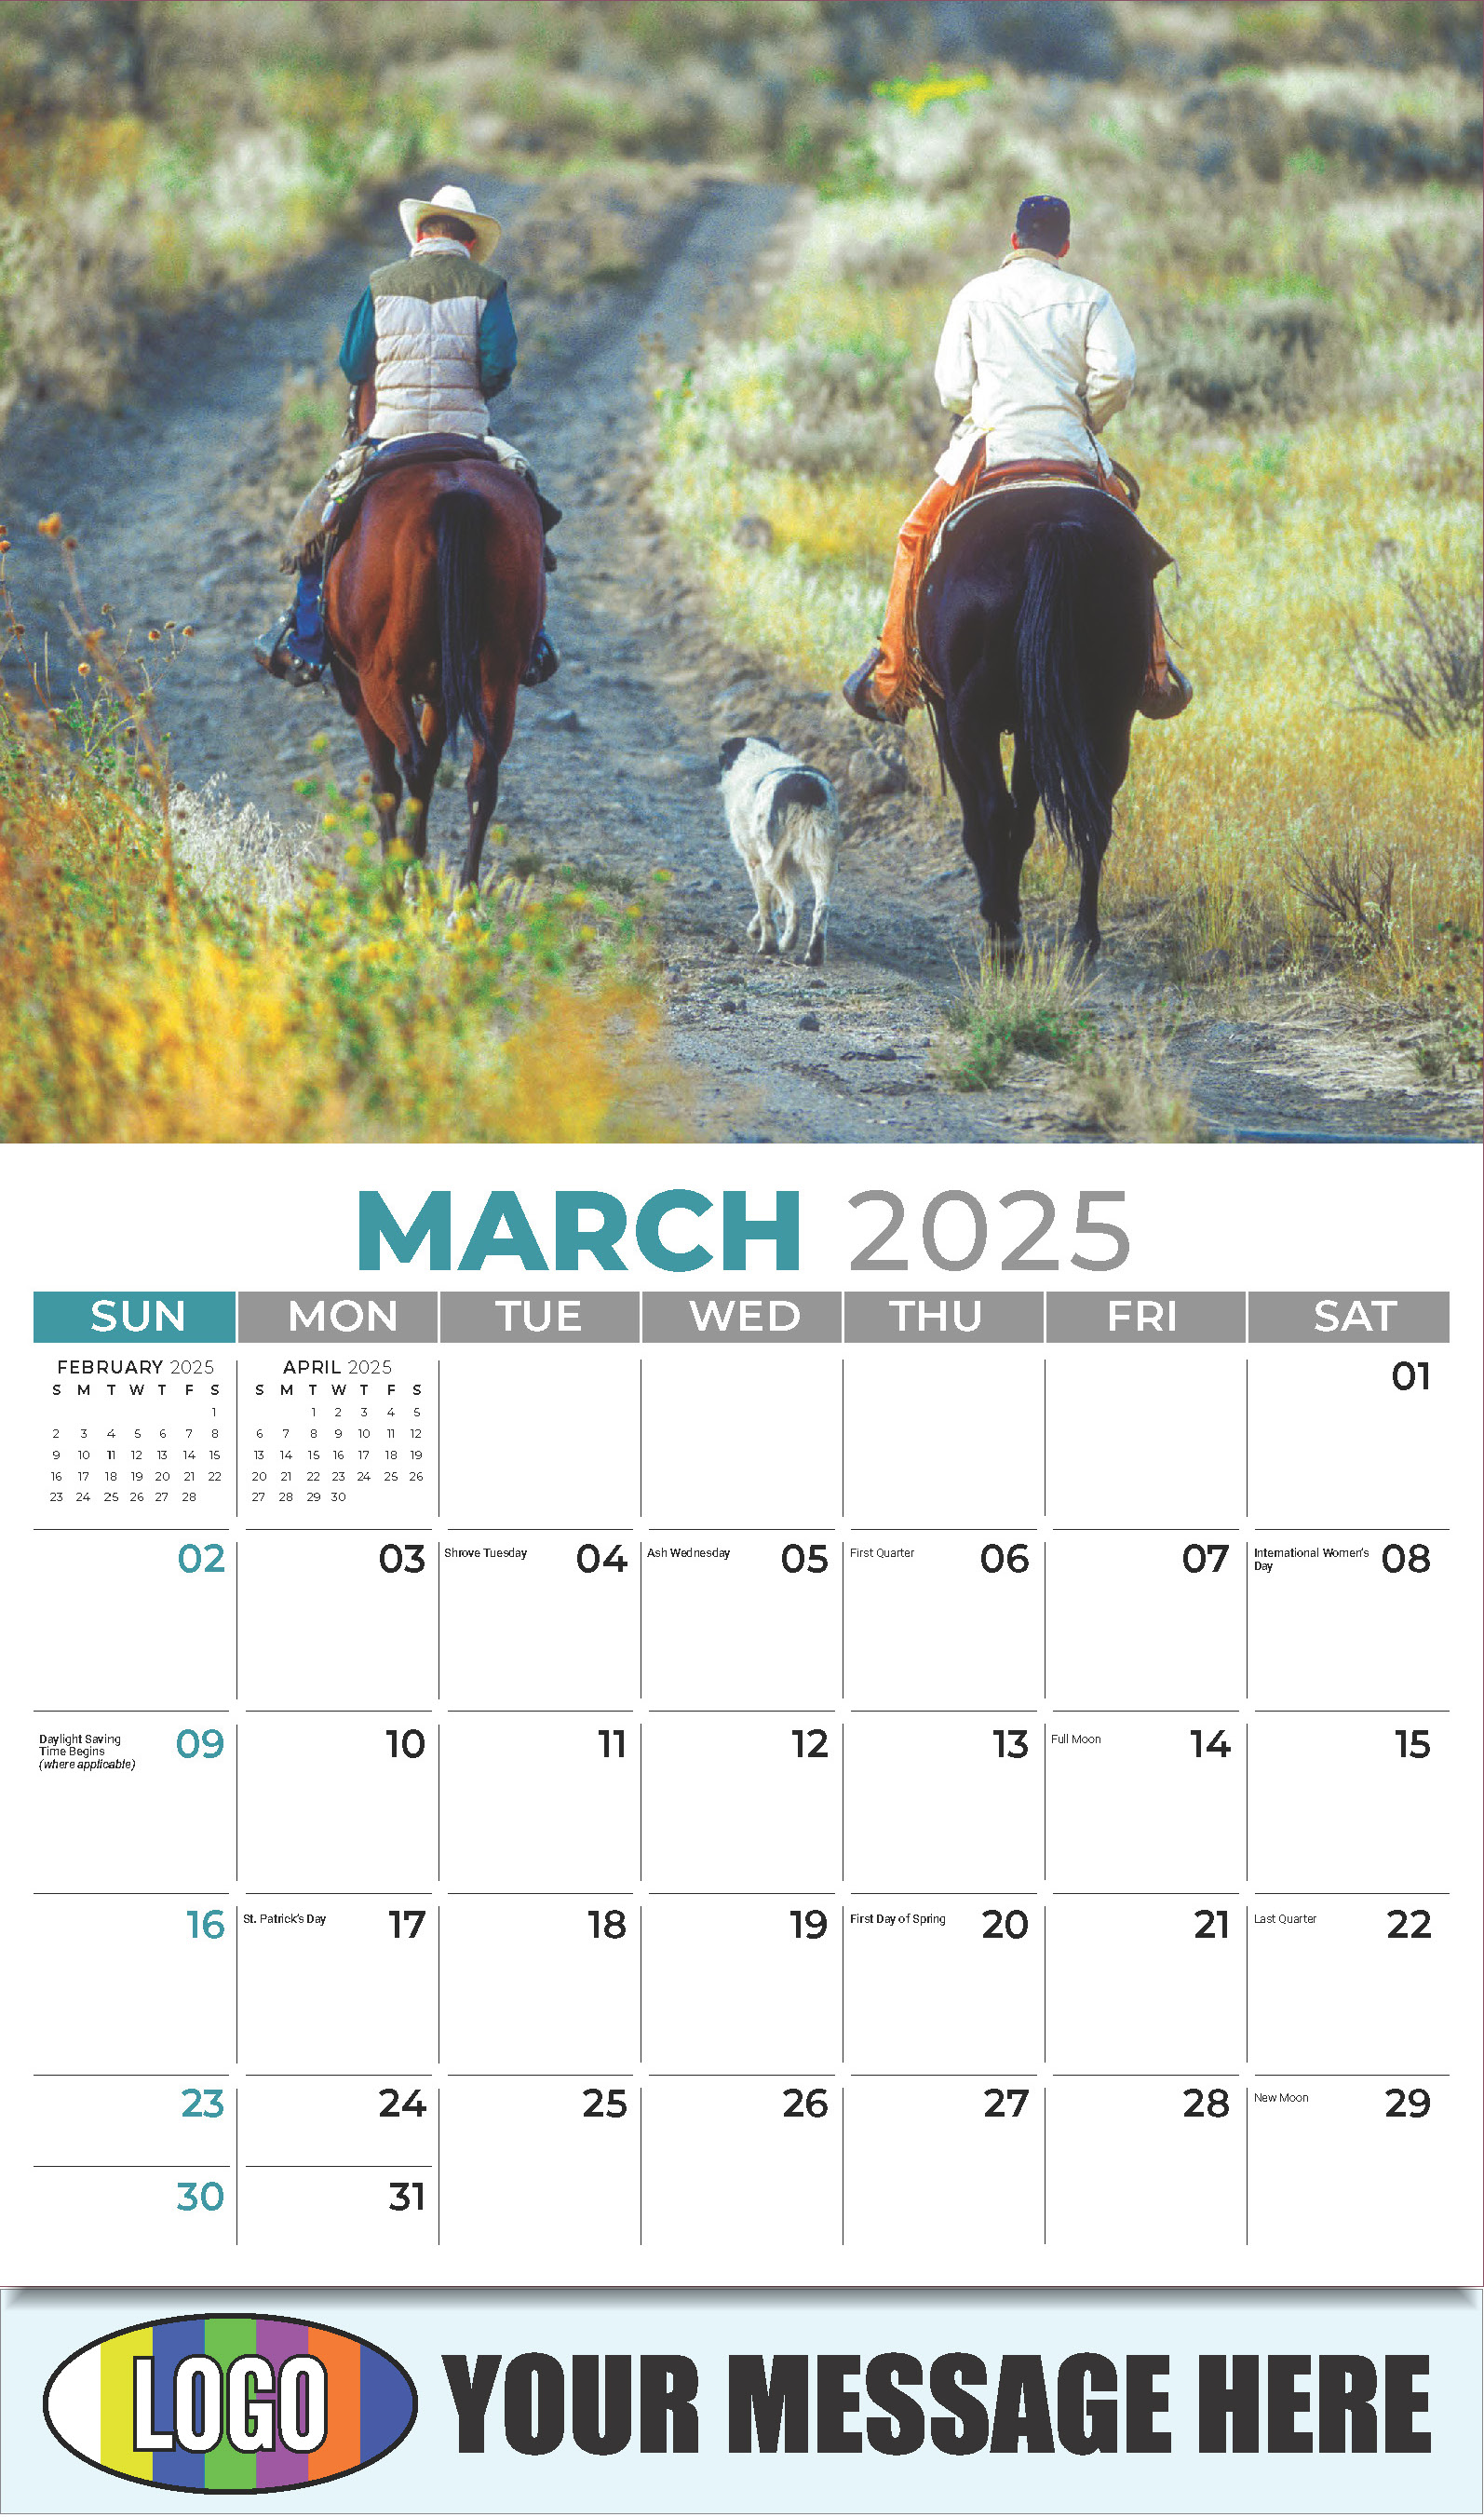 Country Spirit 2025 Business Advertising Calendar - March